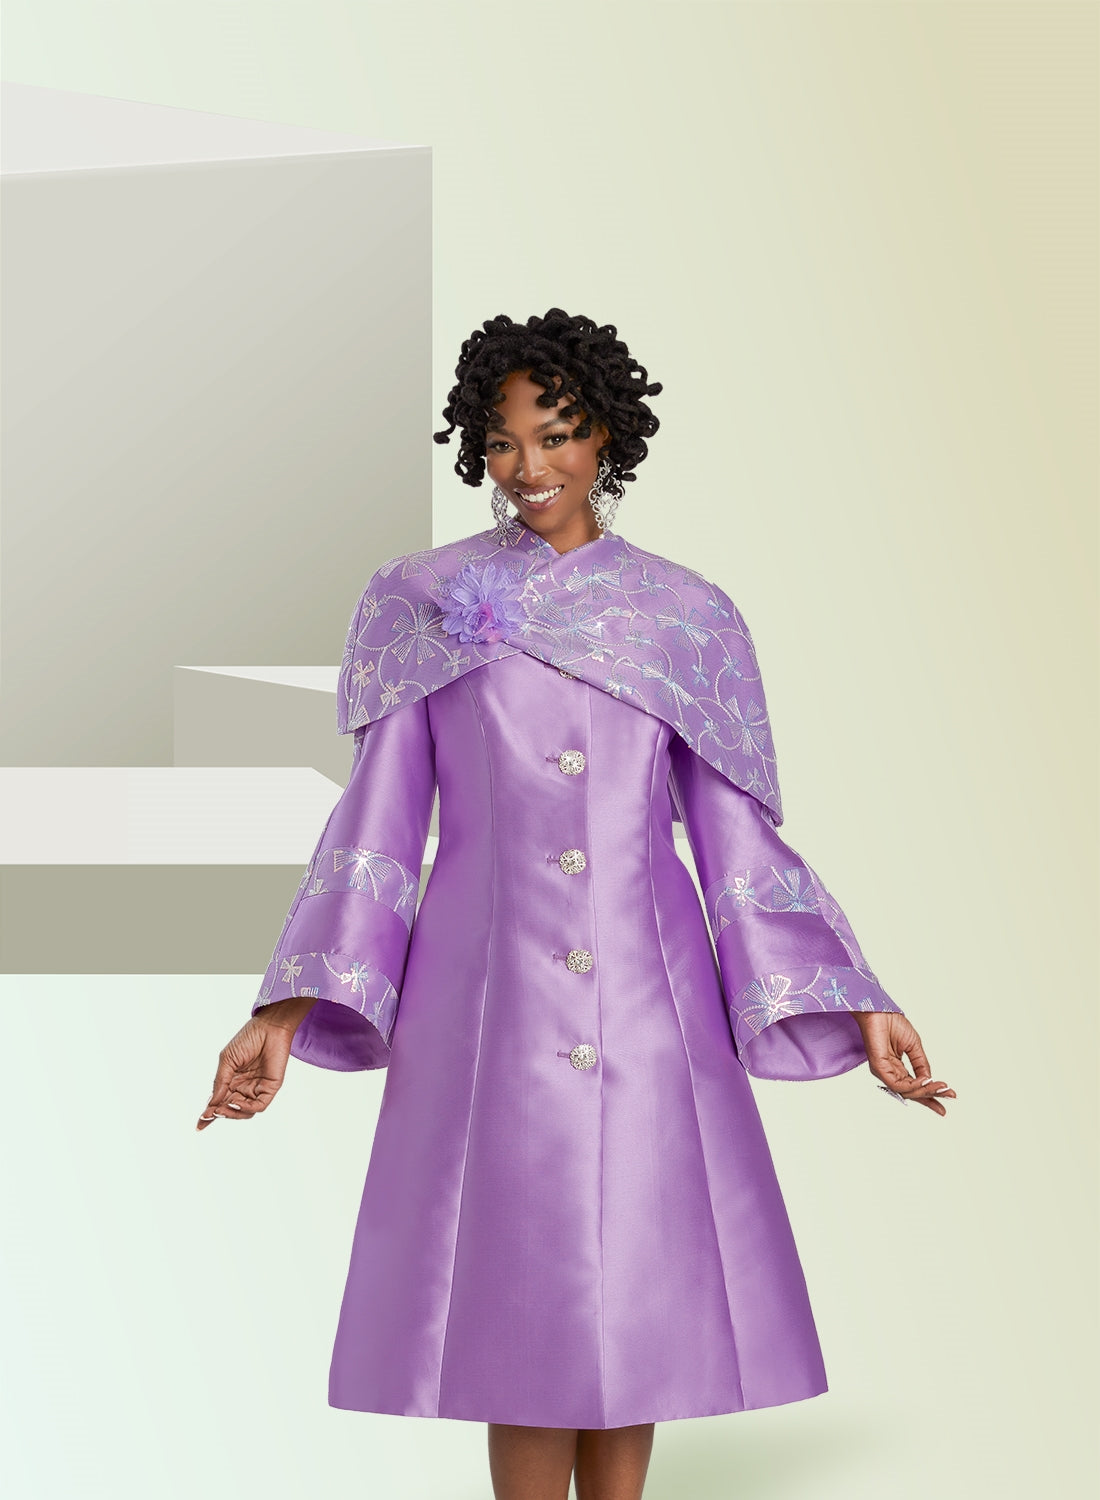 Donna Vinci Embellished Organza Trim Dress The Immediate Resource